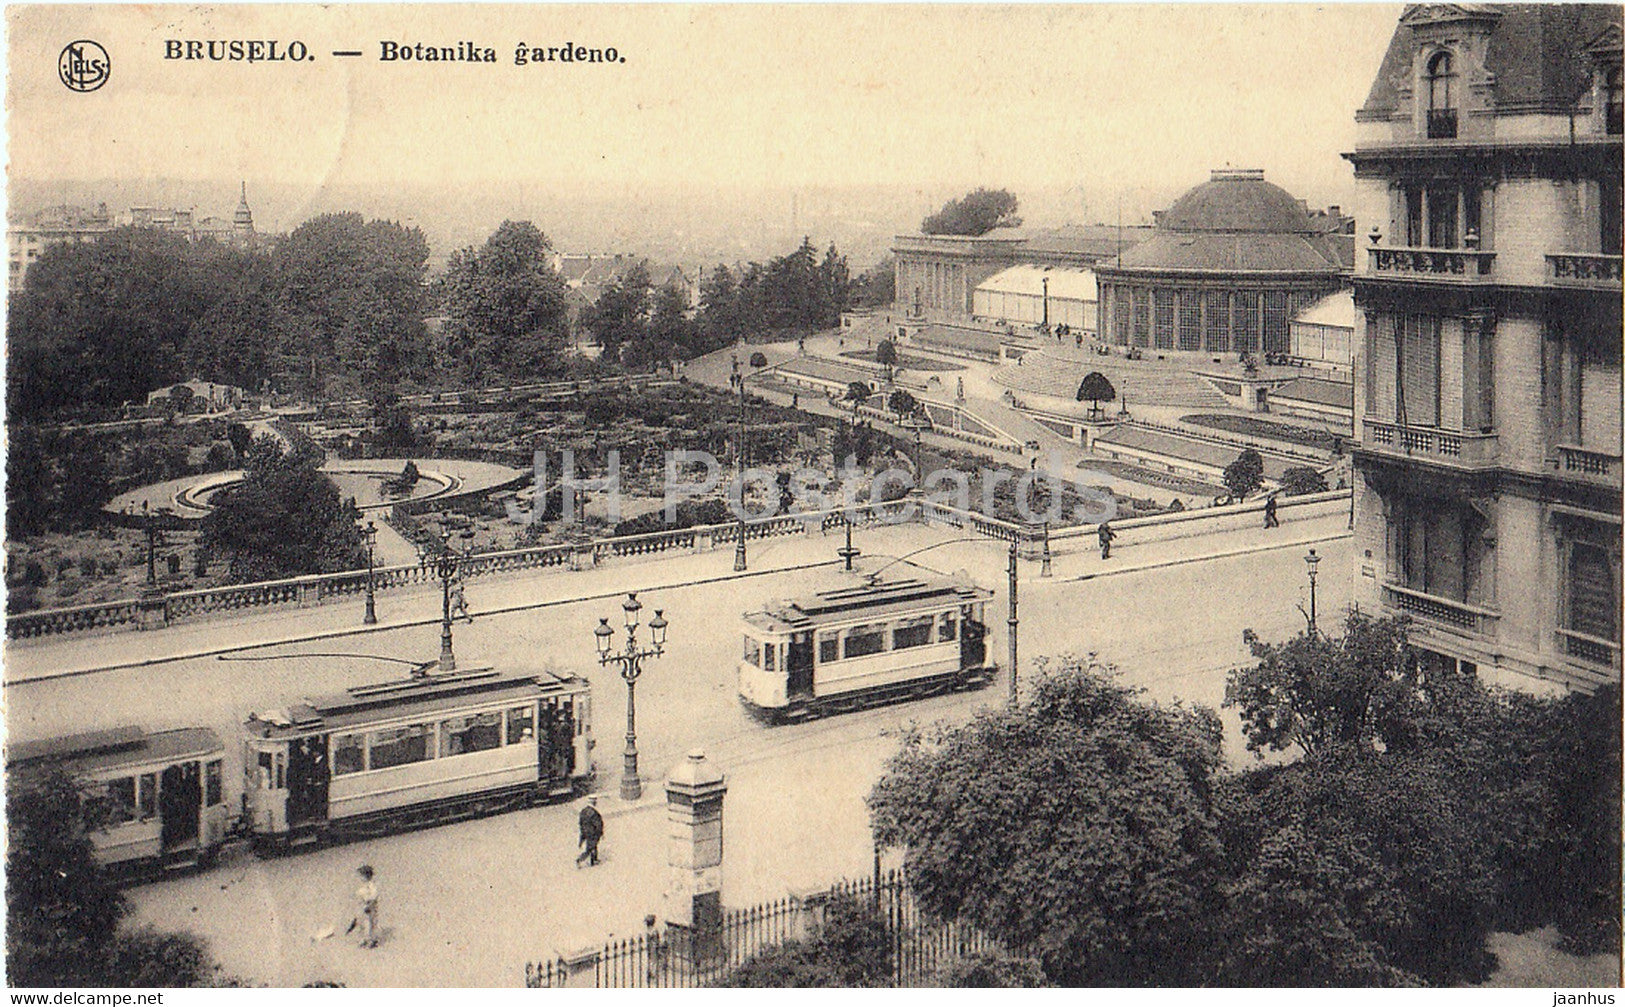 Brussels - Bruselo - Botanika Gardeno - tram - Esperanto - old postcard - 1933 - Belgium - used - JH Postcards